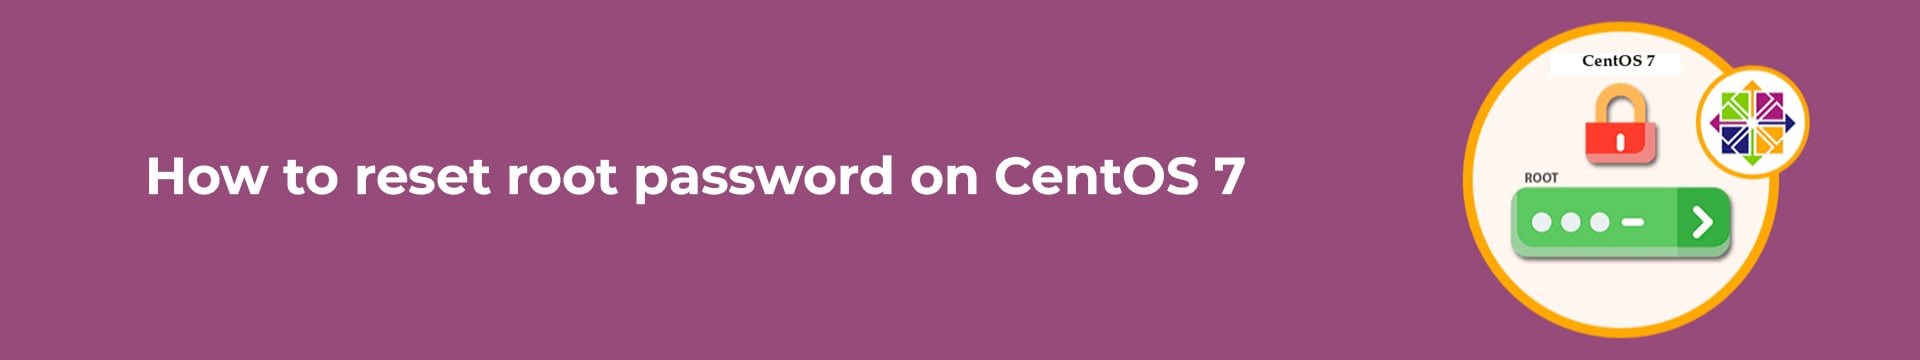 Reset root password on CentOS 7